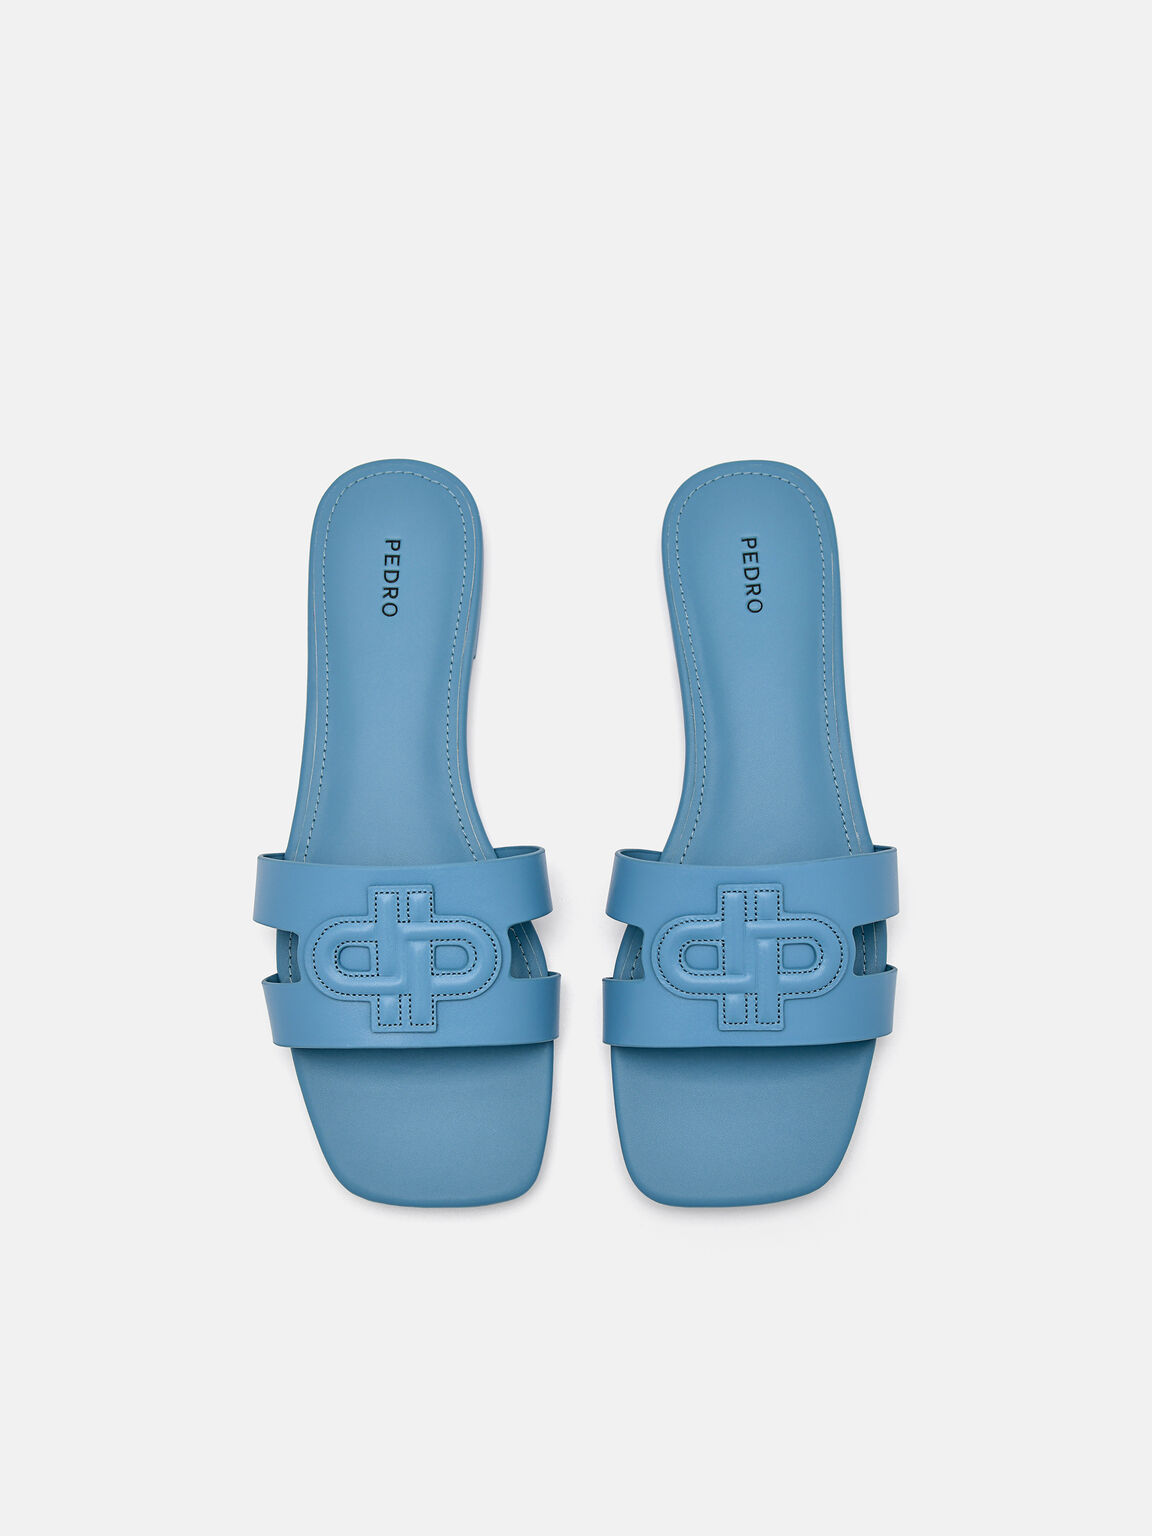 PEDRO Icon Leather Slip-On Sandals, Slate Blue, hi-res